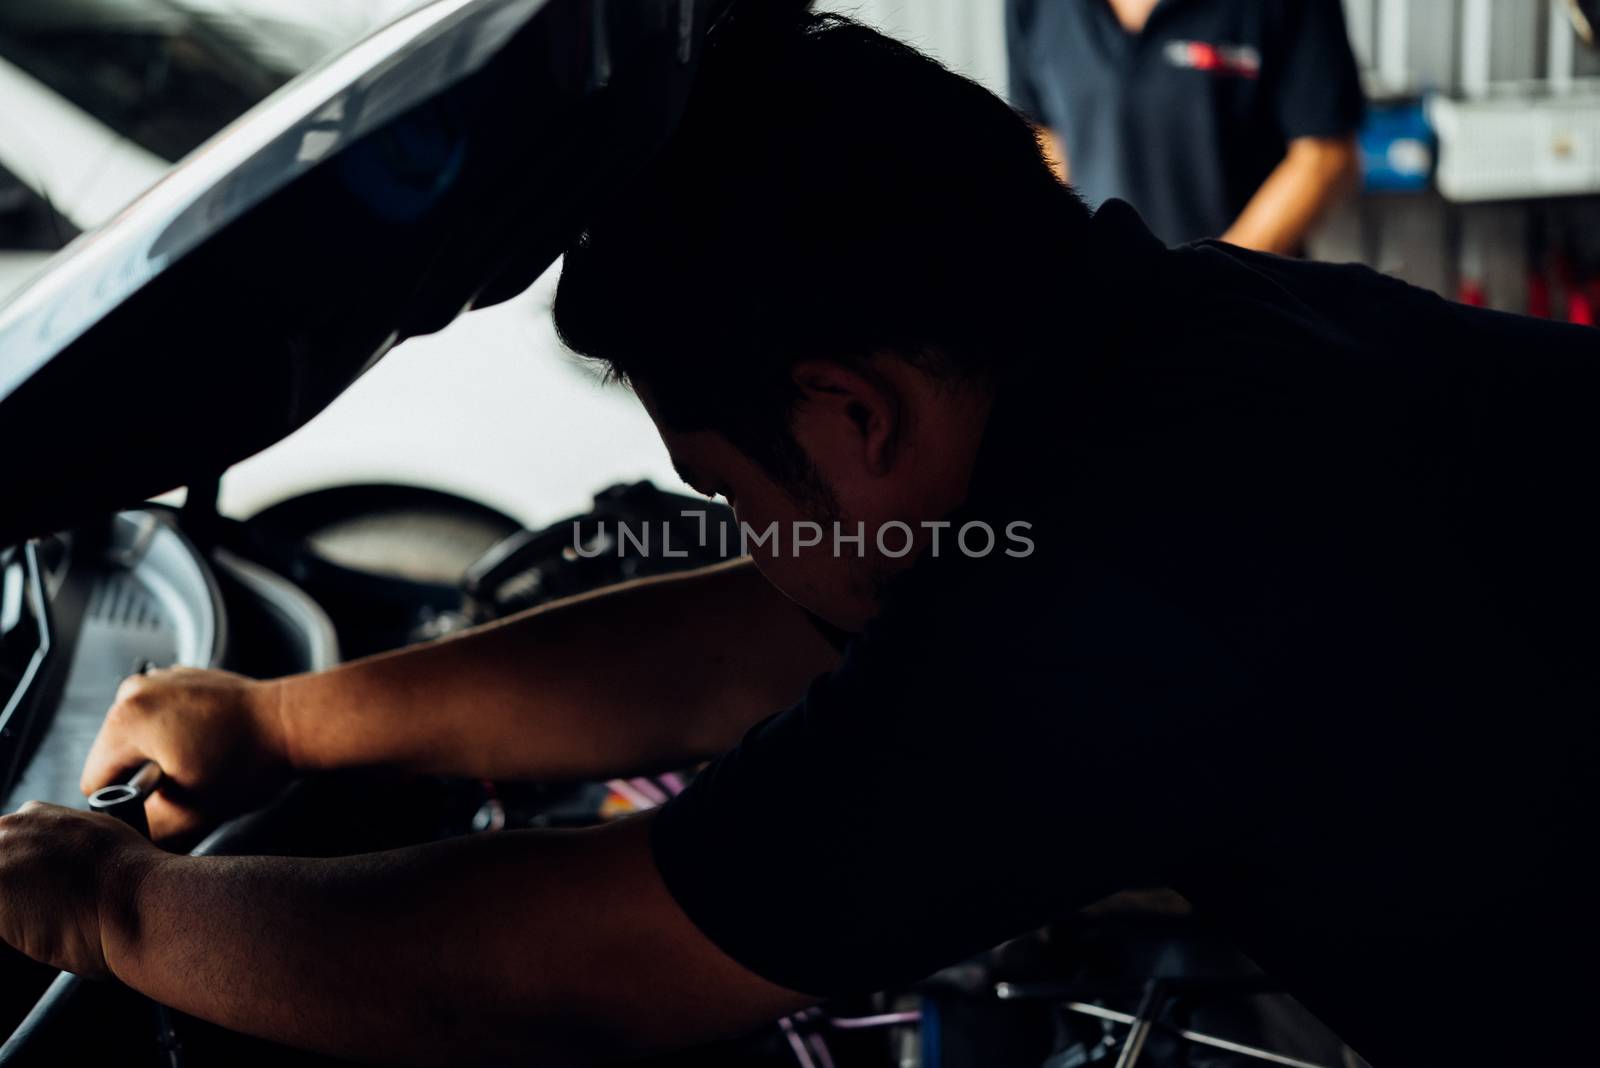 Car mechanic or serviceman checking a car engine for fix and repair problem at car garage or repair shop